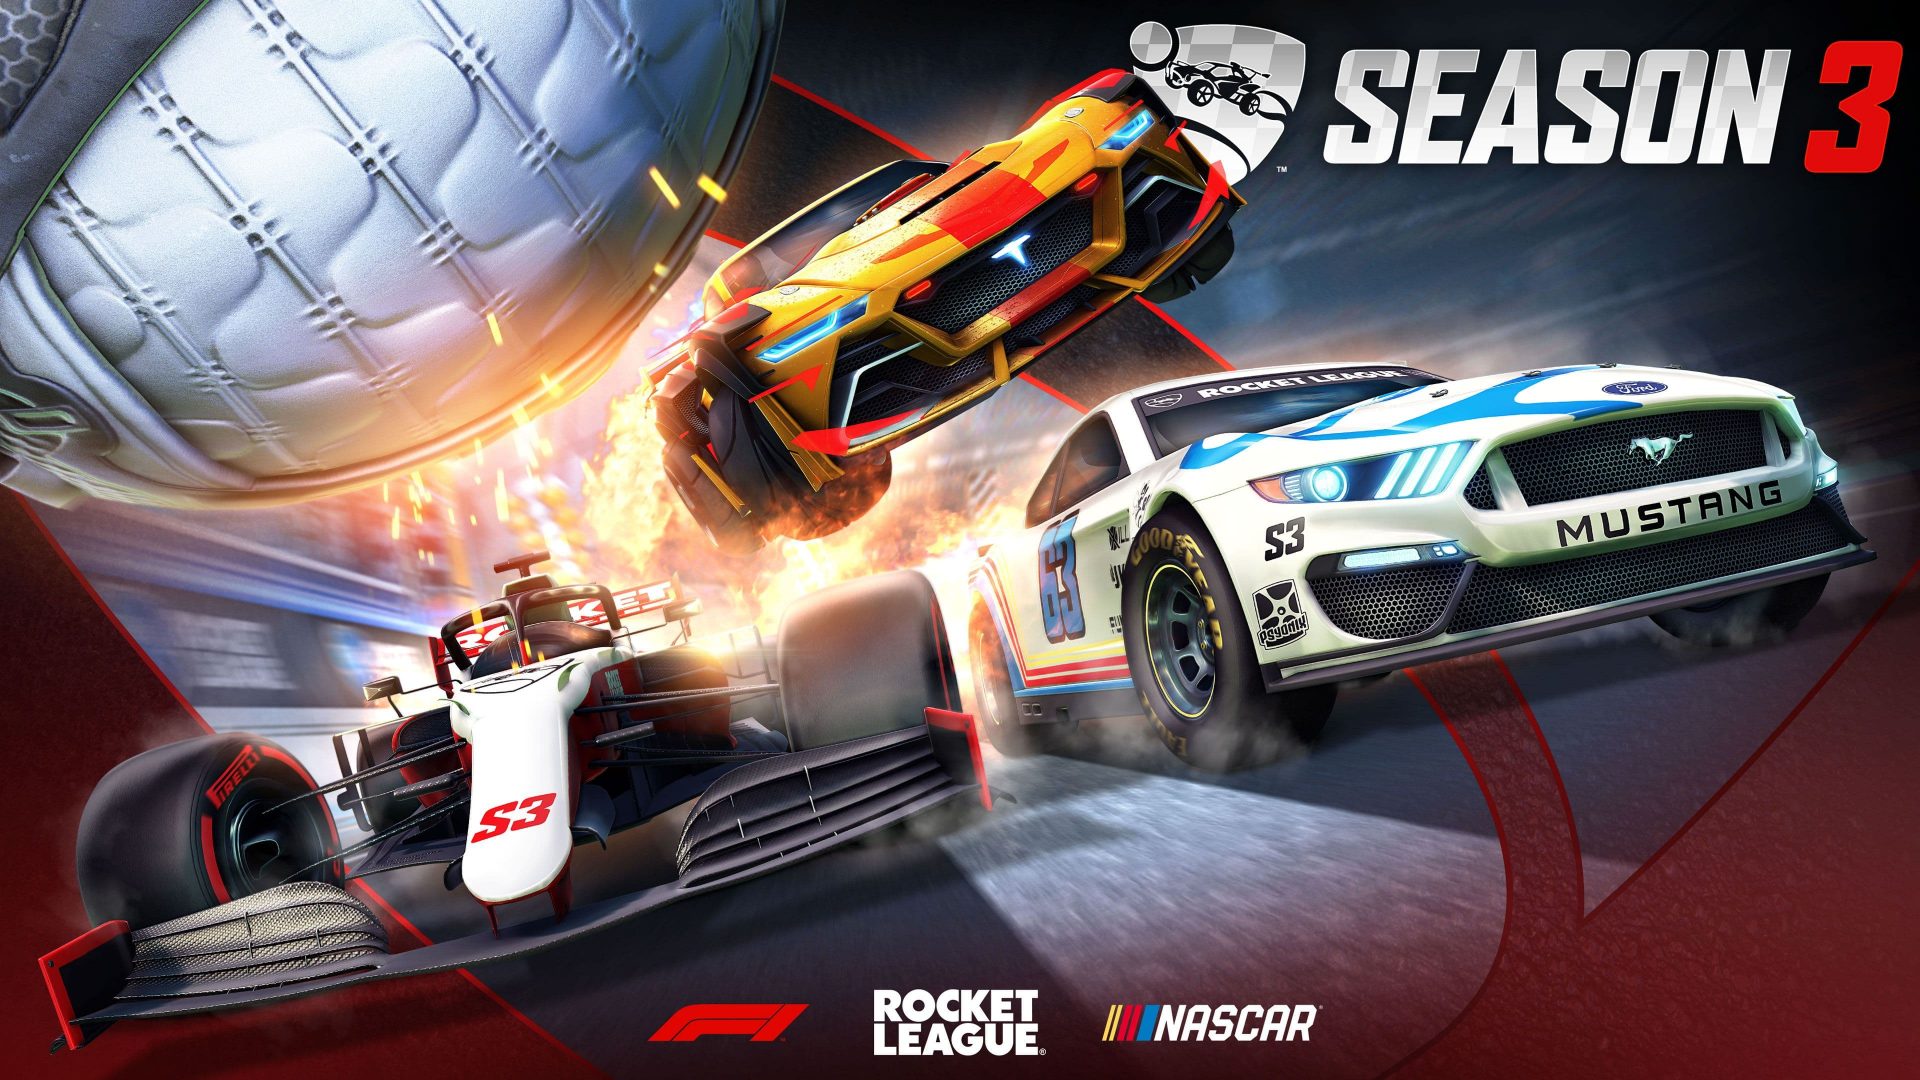 ‘Rocket League’ season three will characteristic F1 and NASCAR automobiles